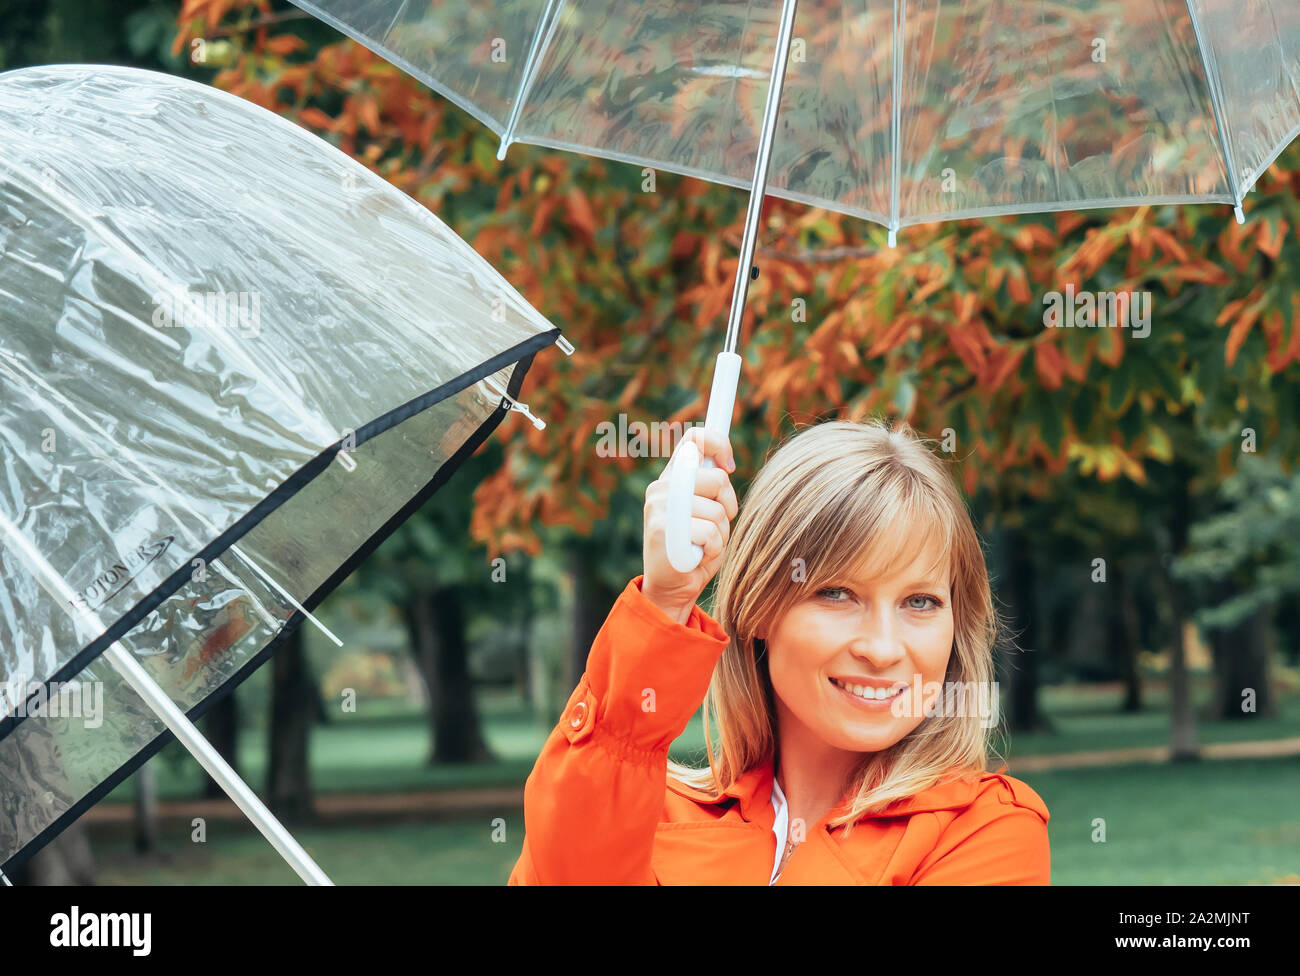 Paraguas e imágenes de alta resolución - Alamy